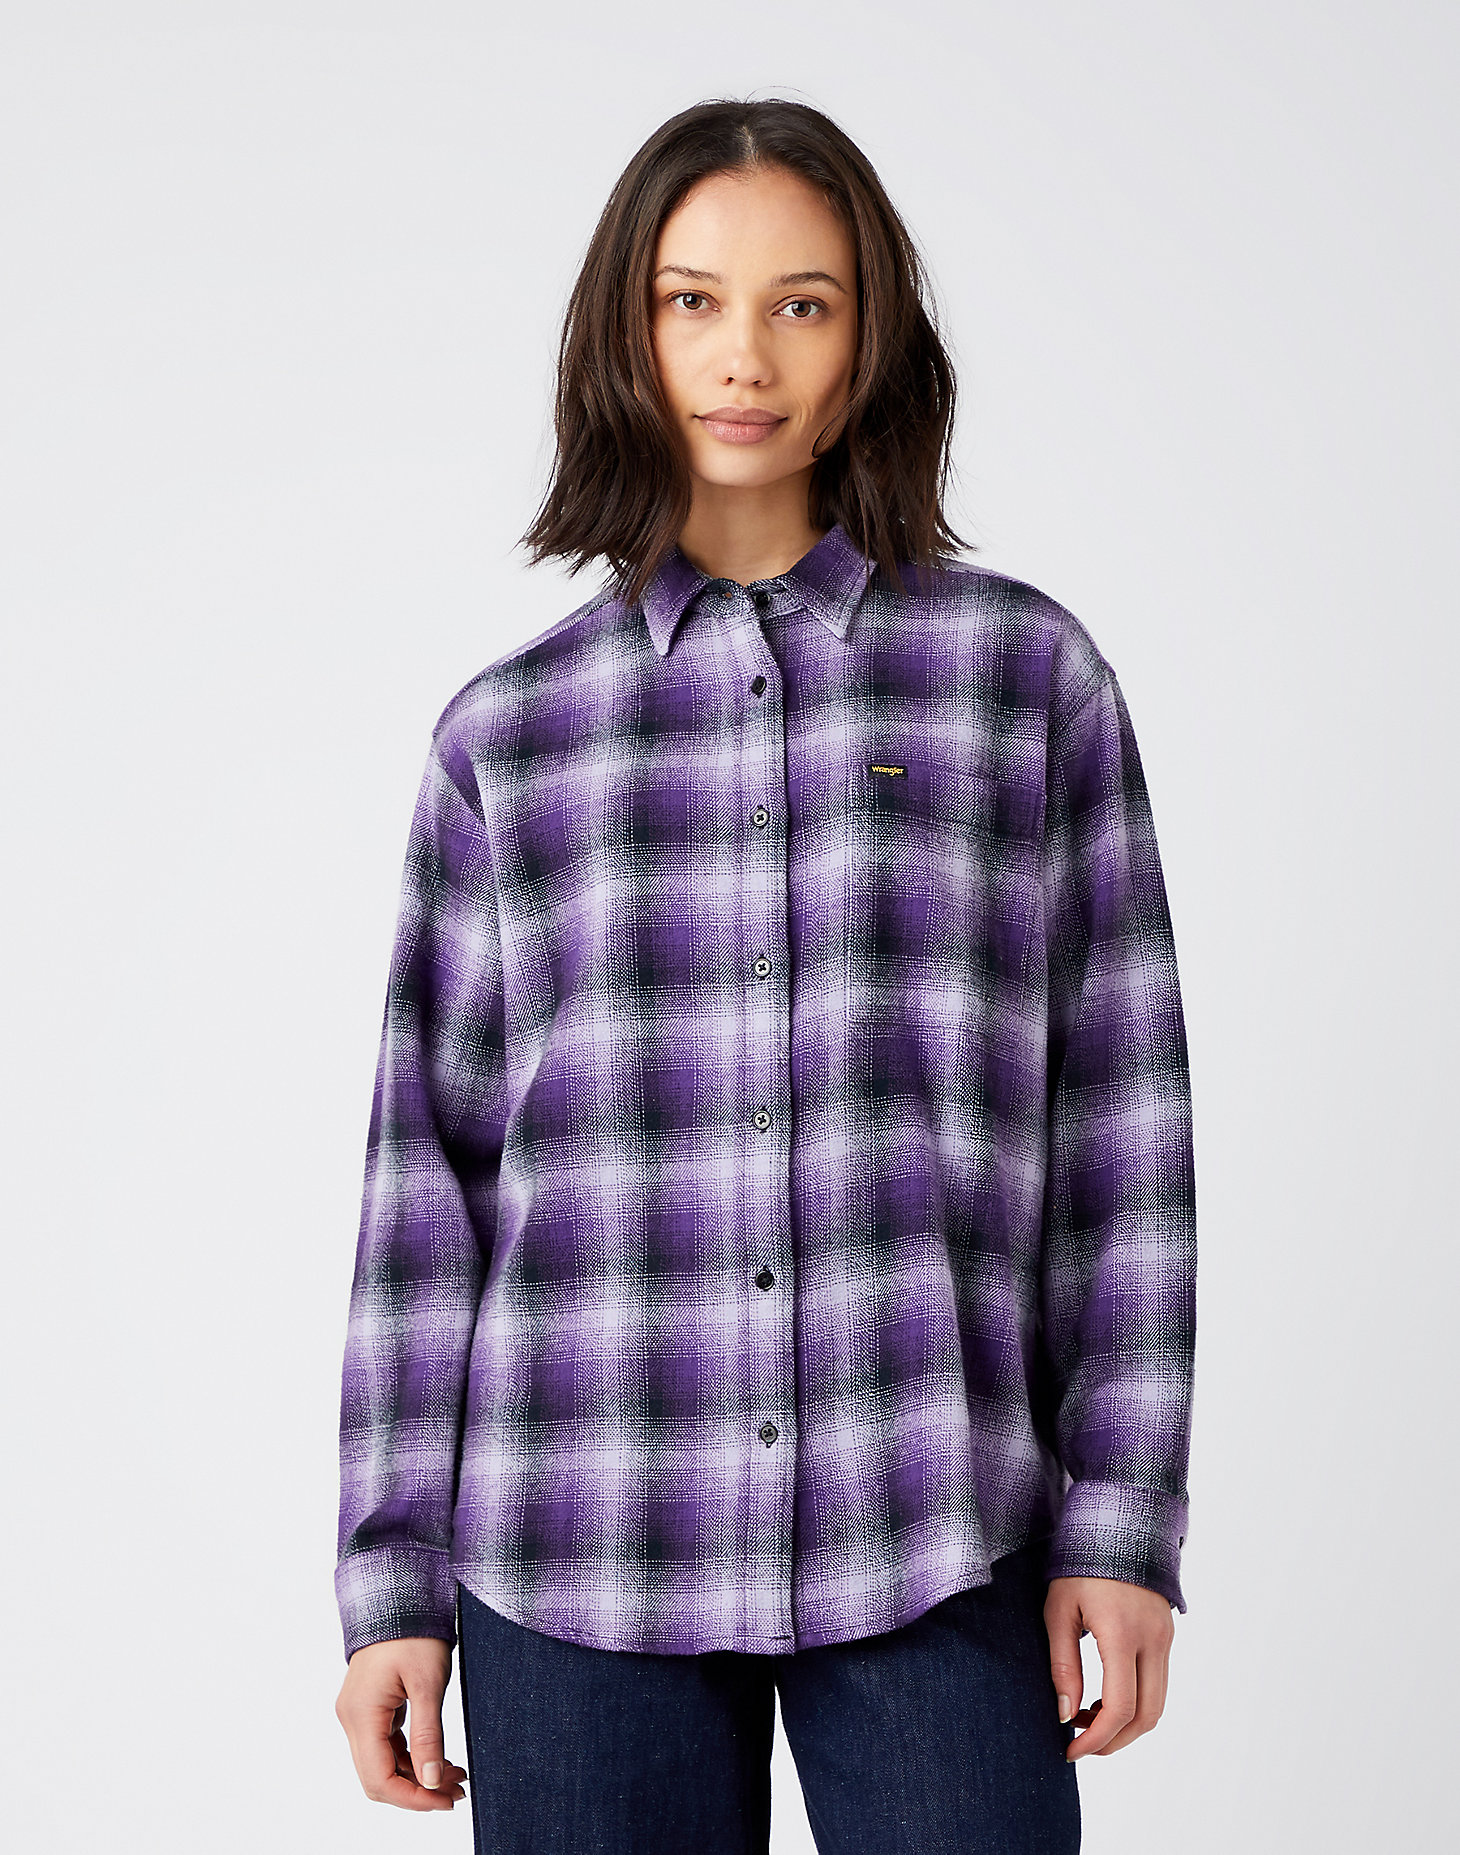 Western Check Shirt in Petunia Purple alternative view 1